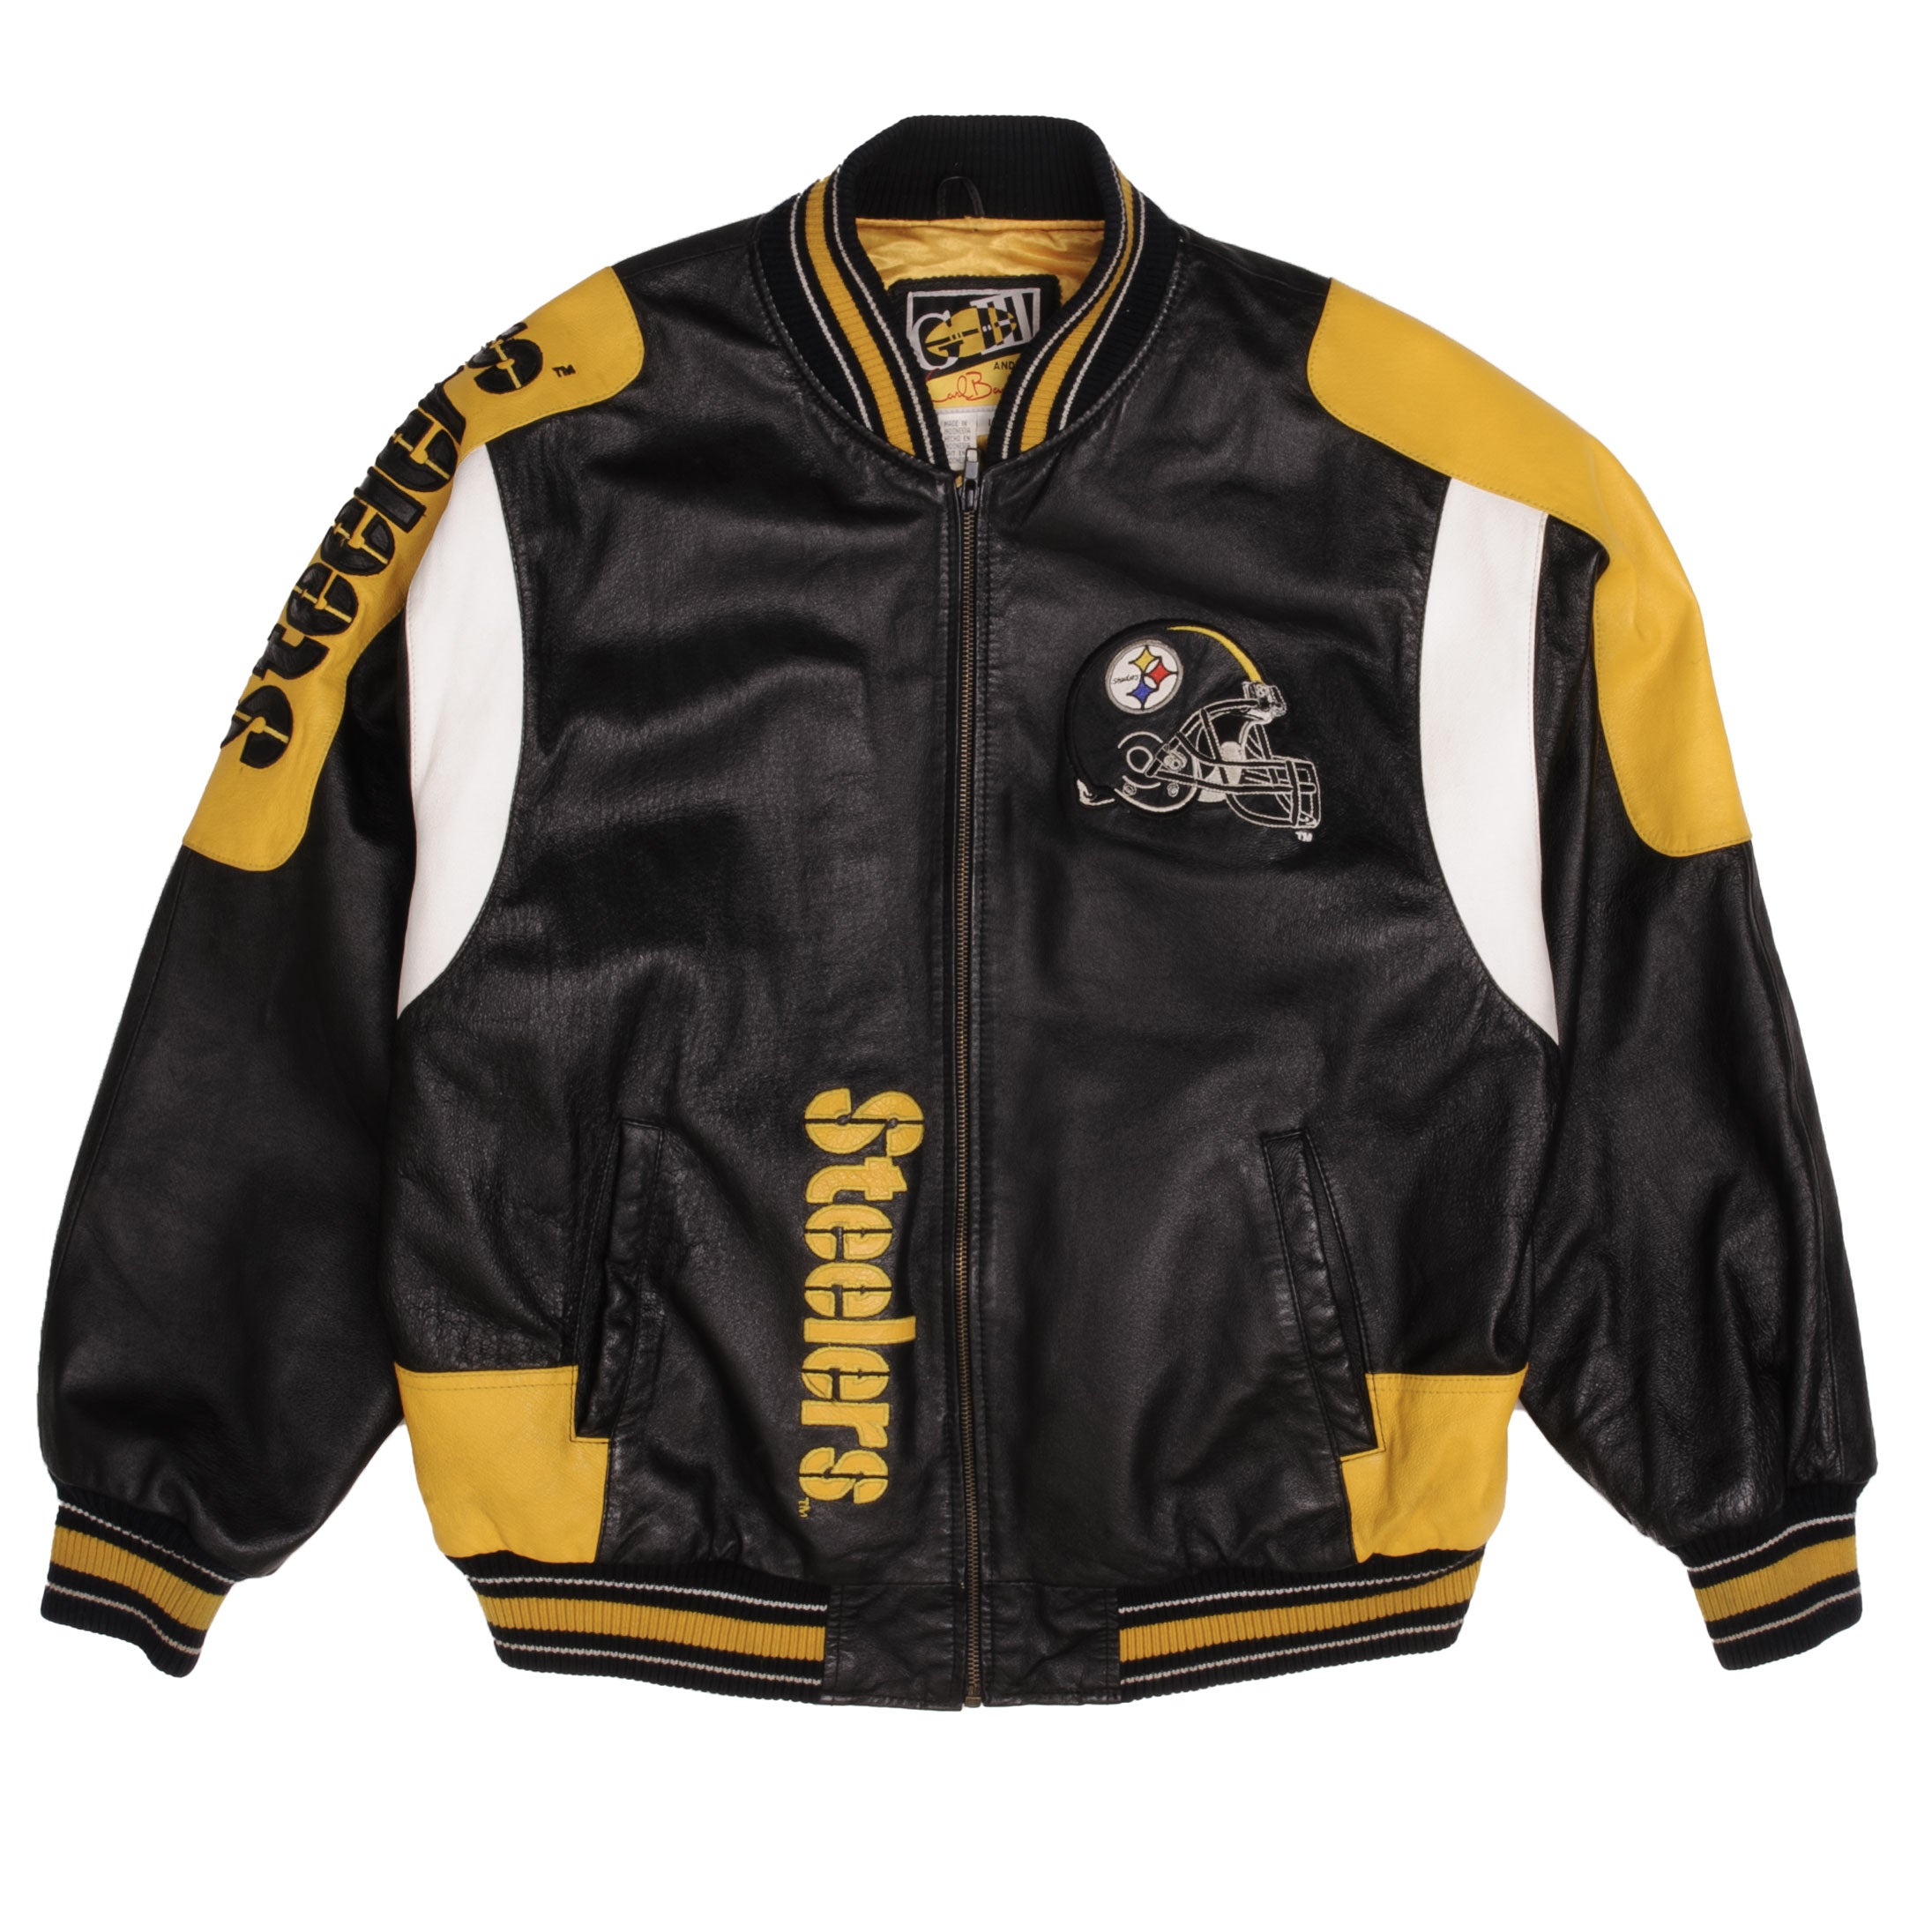 Vintage NFL Pittsburg Steelers Carl Banks Leather Jacket 1990s Size Large